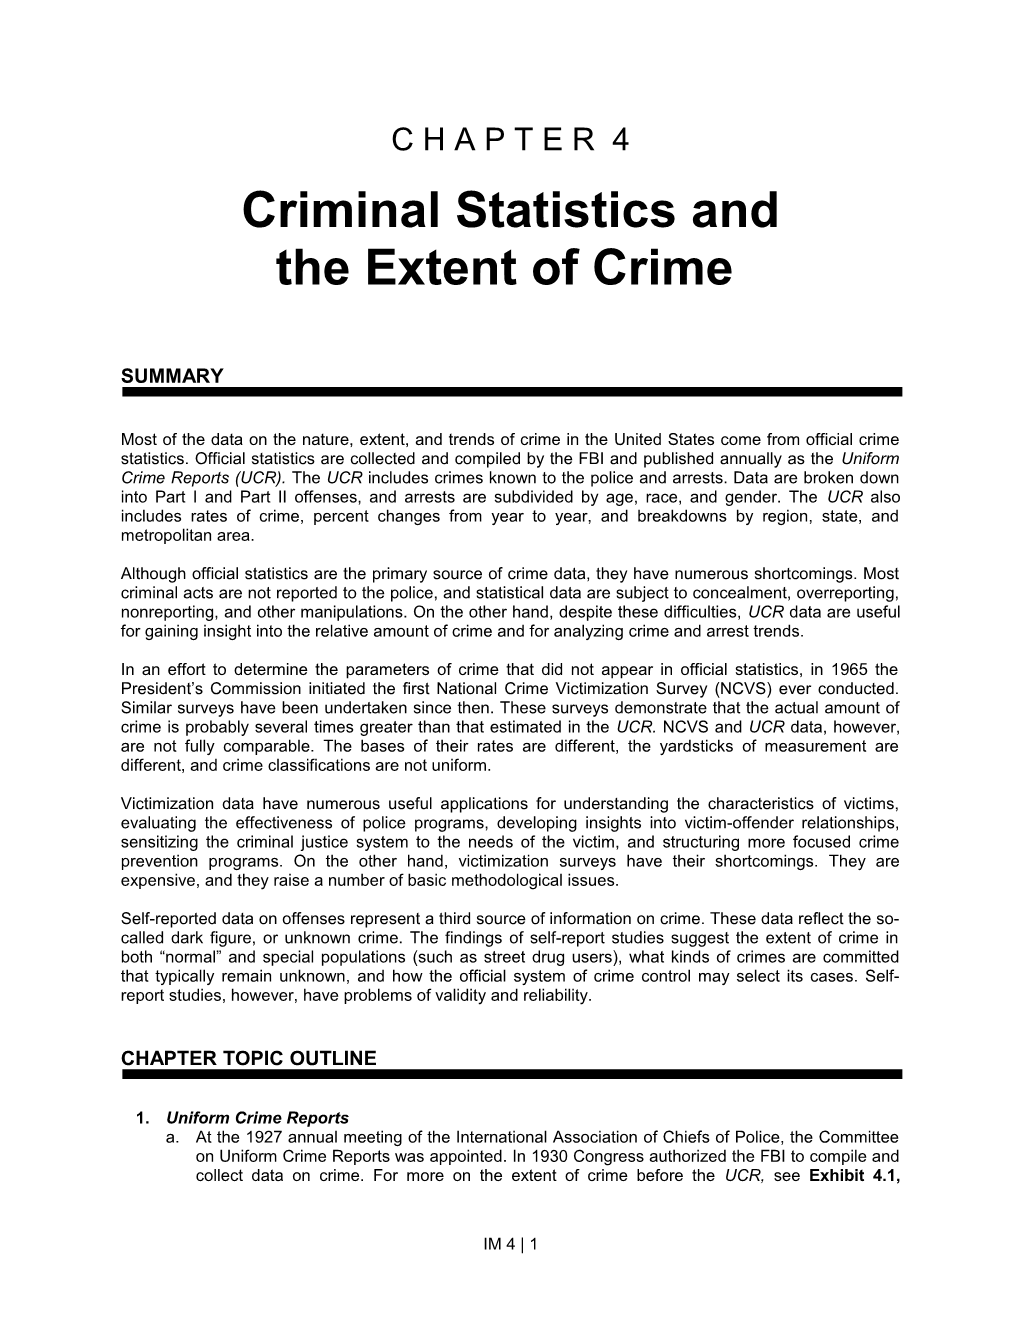 Criminal Statistics And